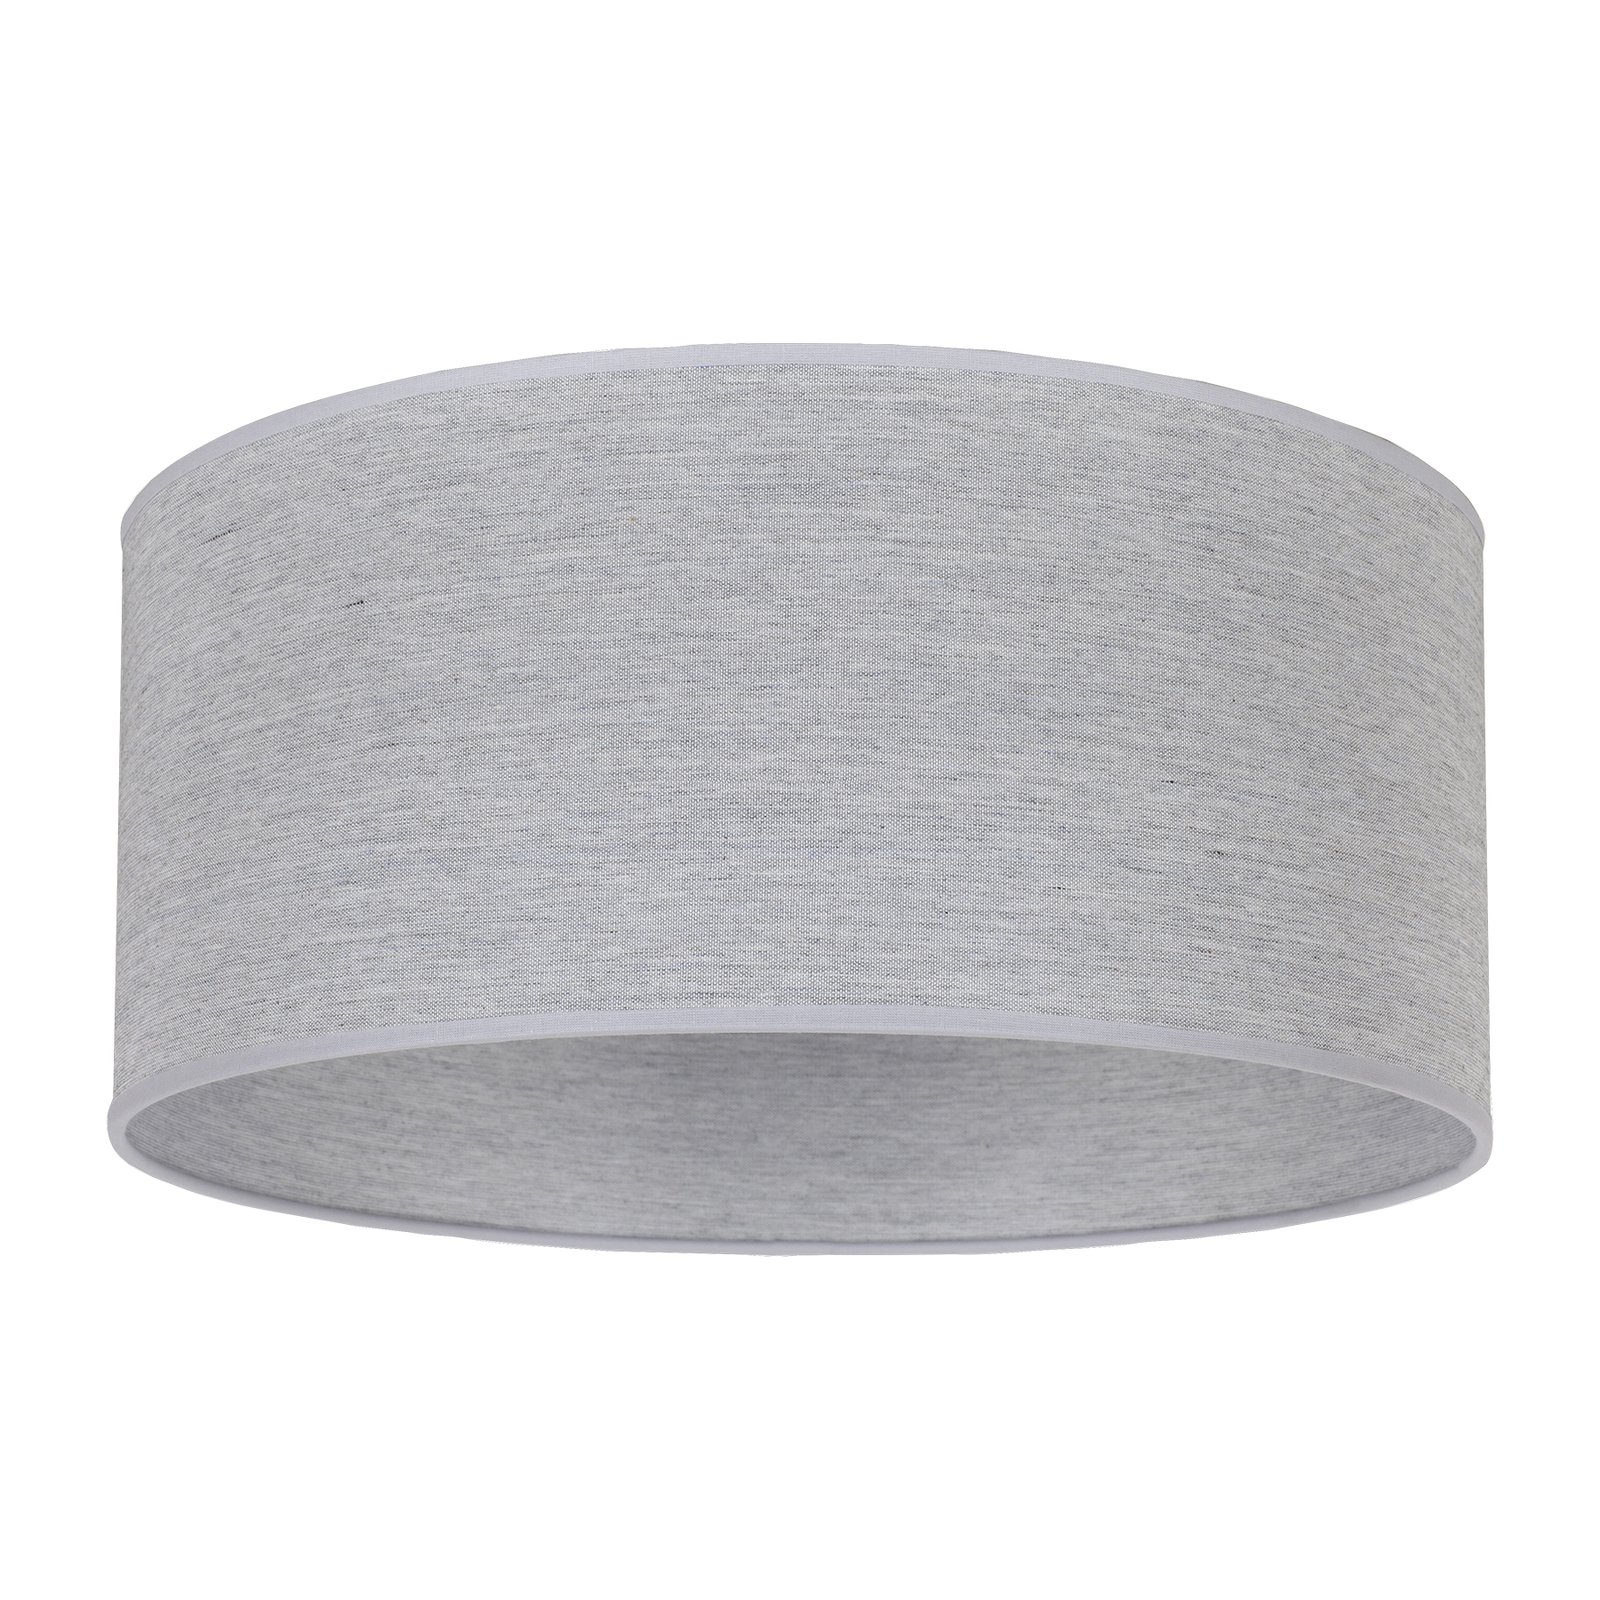 Roller lampshade, grey, Ø 50 cm, height 24 cm